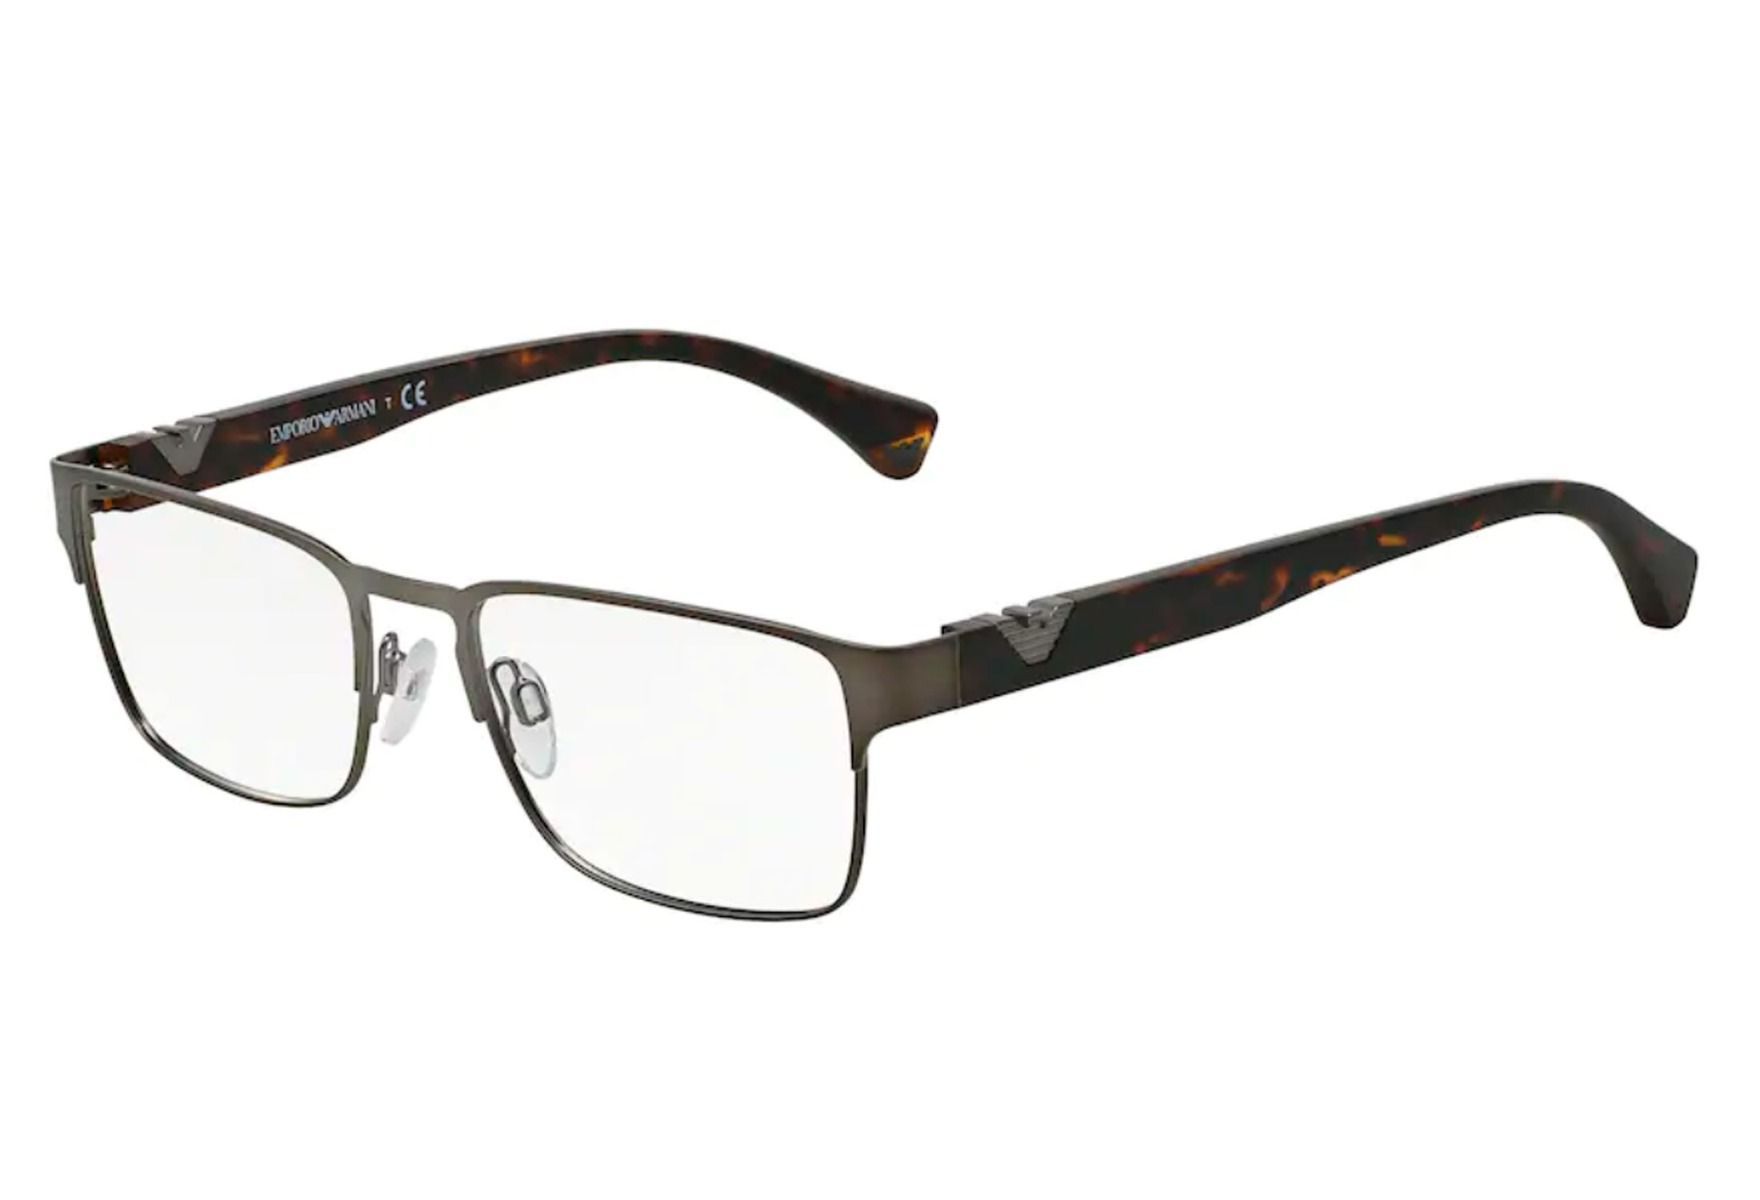 Emporio Armani briller - ea1027 3003 - Metall, Large Hel ramme i Metall, Plast - Rektangulære